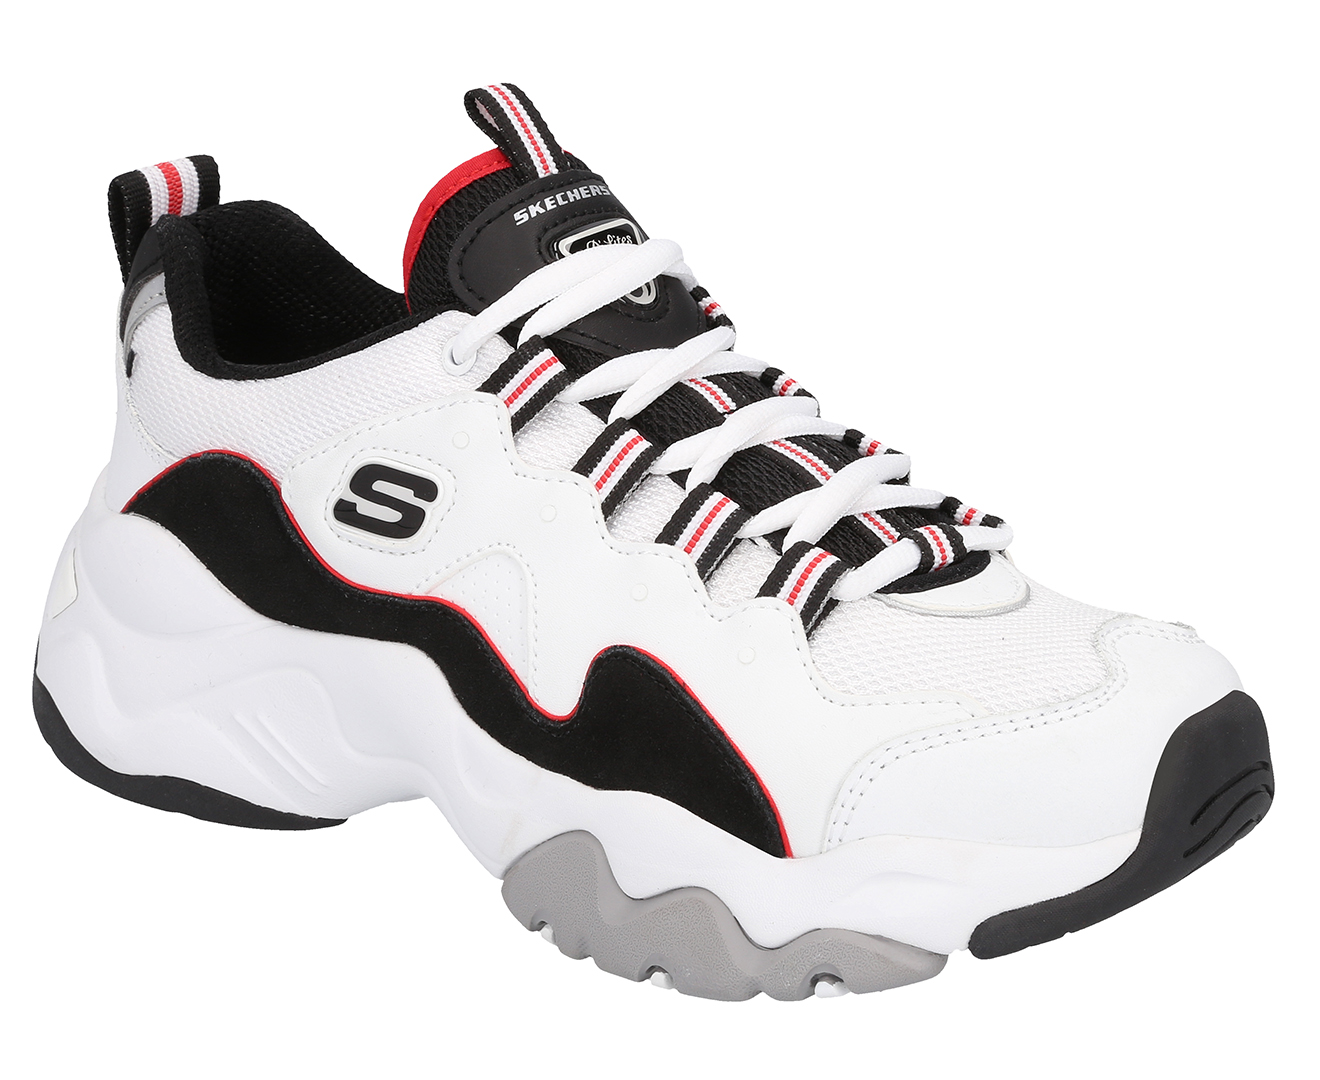 Skechers Women's D'Lites 3.0 Zenway Shoe - White/Black/Red | Catch.com.au